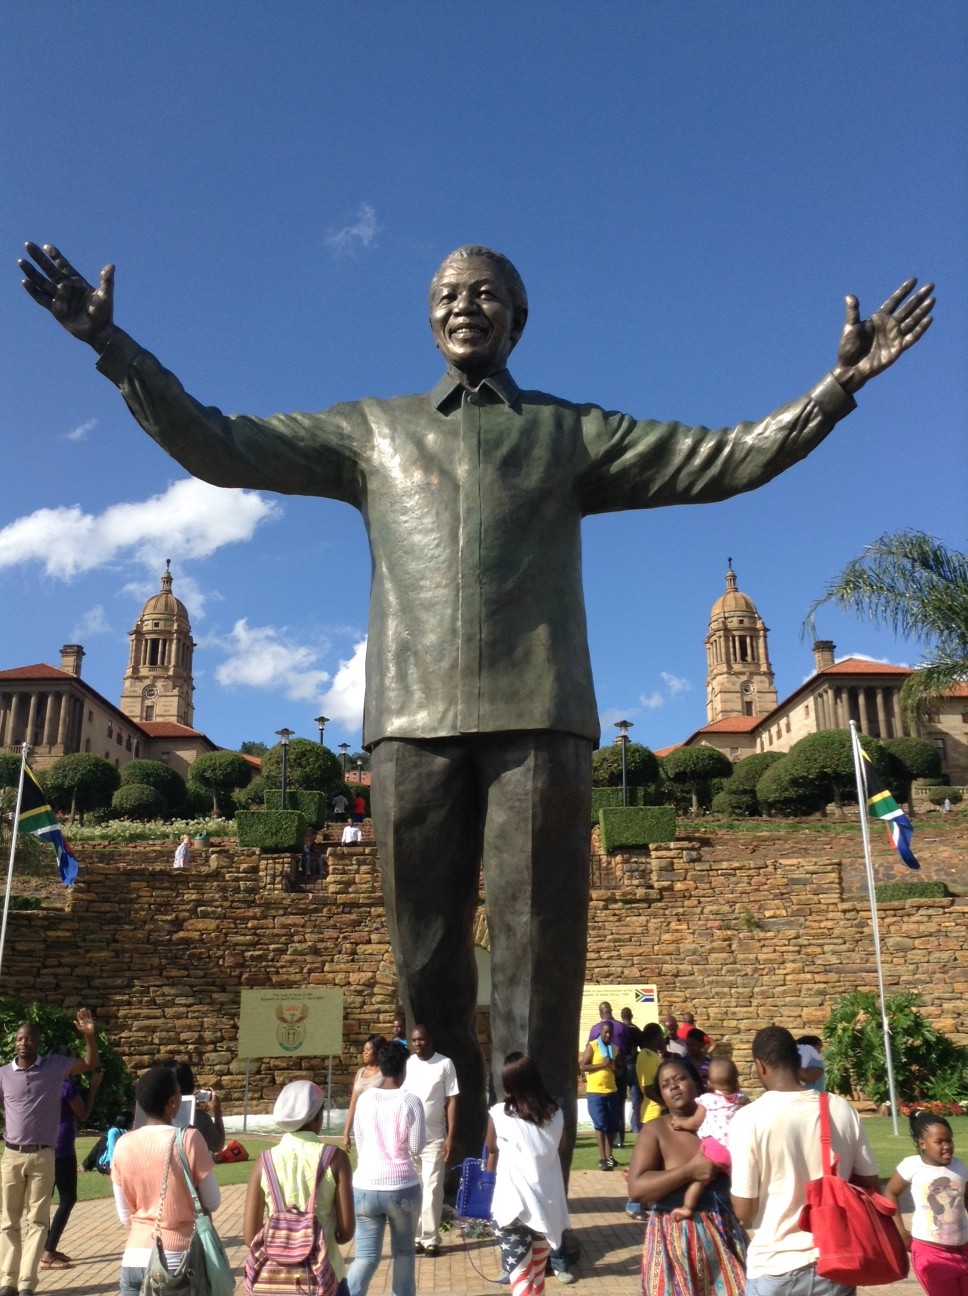 Mandela's 24-foot statue in Pretoria (NNPA Photo by George E. Curry)